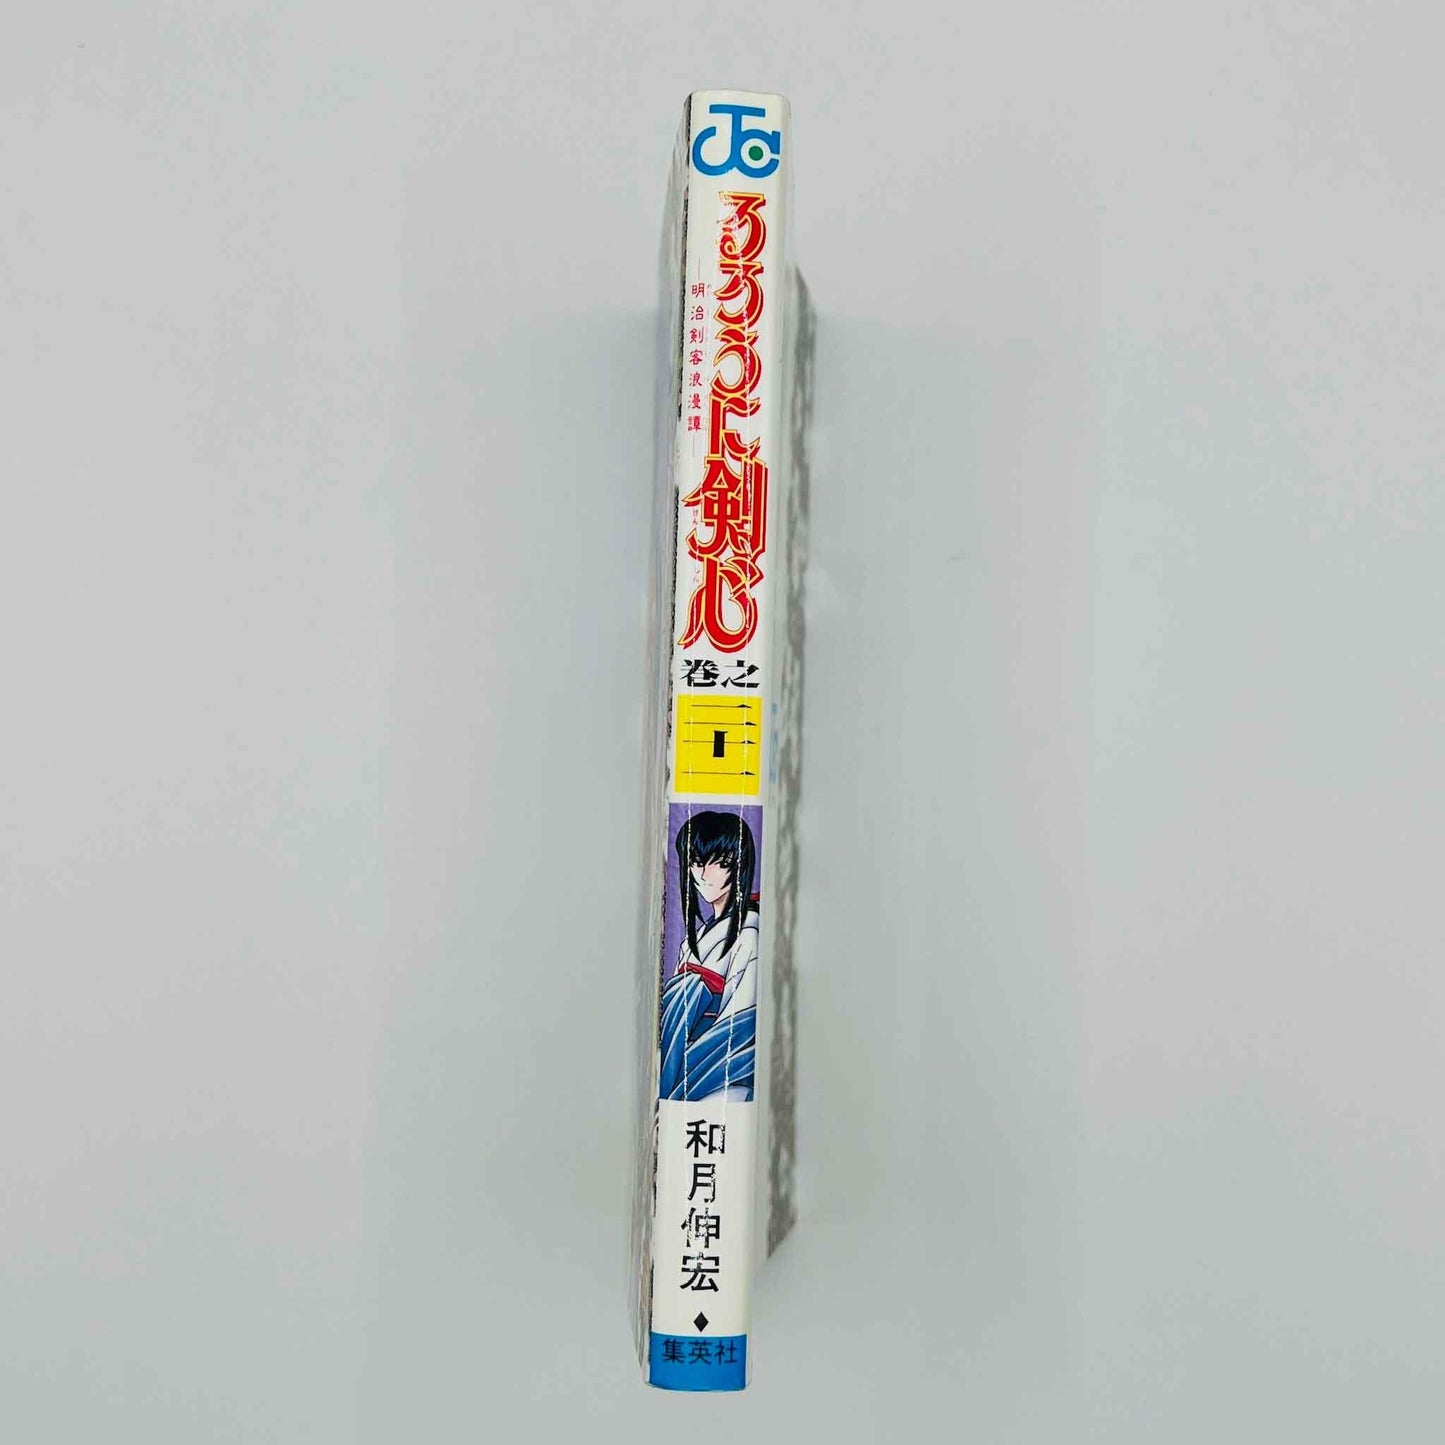 Rurouni Kenshin - Volume 21 - 1stPrint.net - 1st First Print Edition Manga Store - M-KENSH-21-001